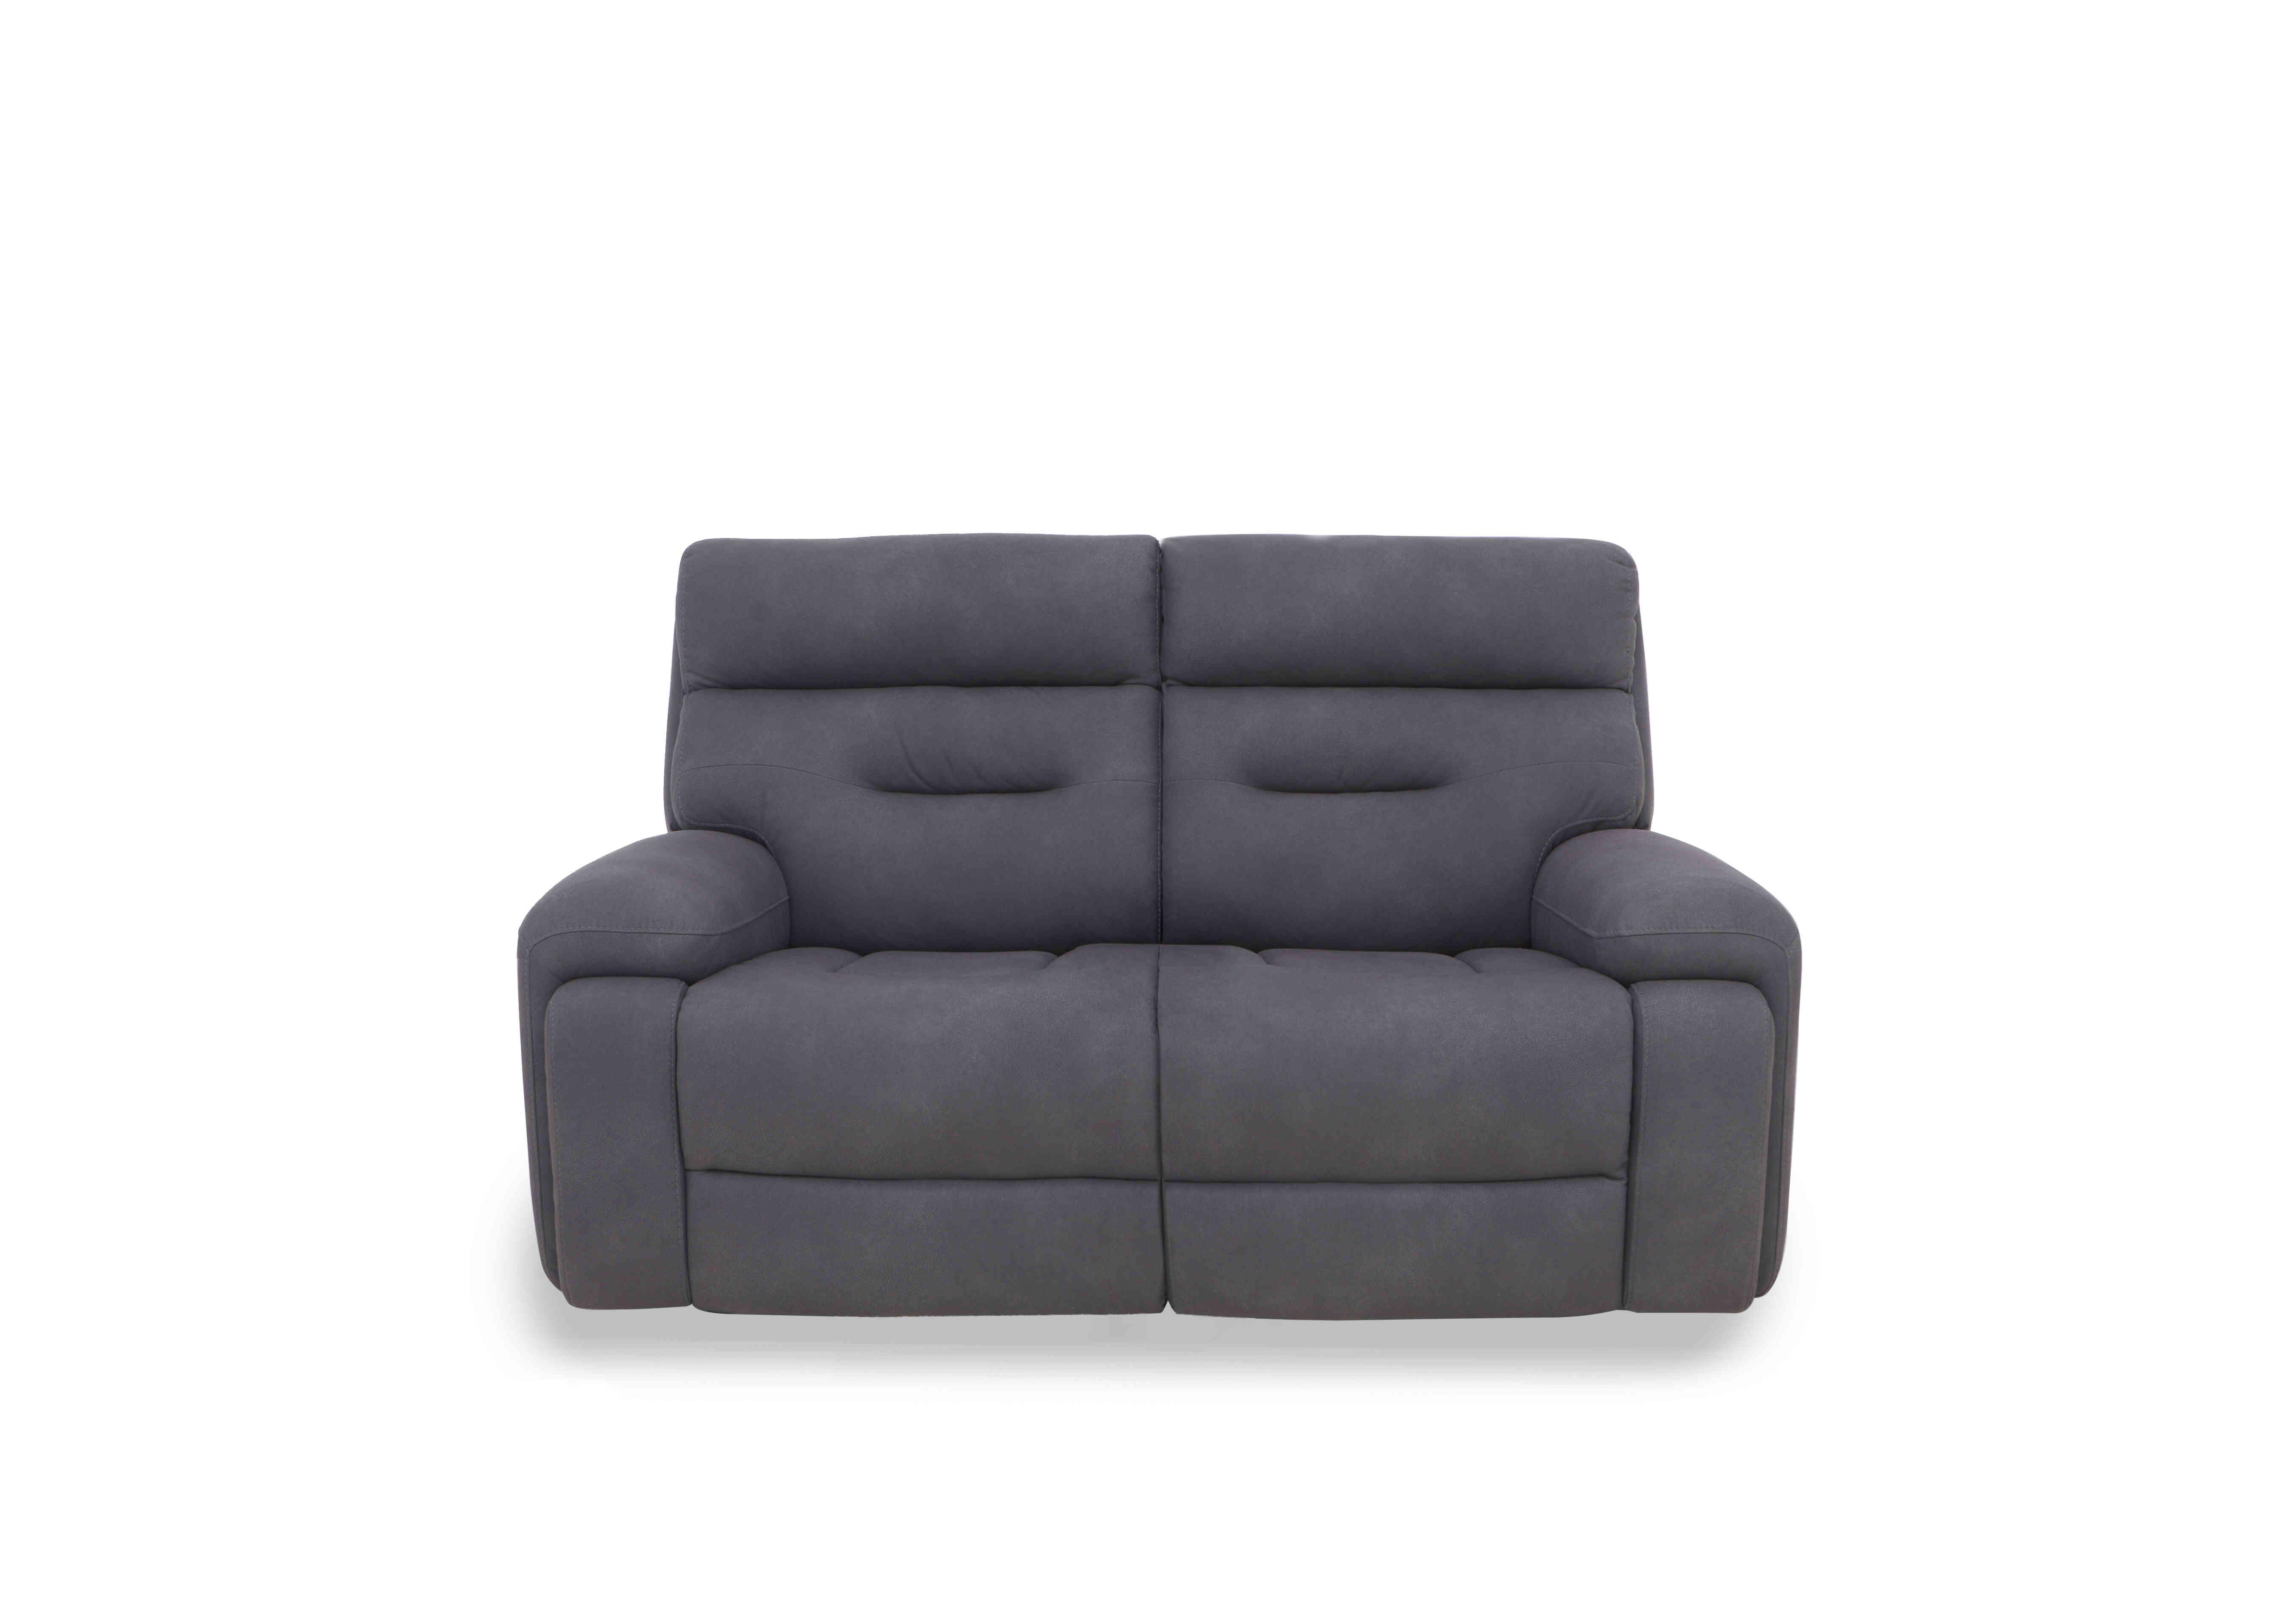 Cinemax 2 Seater Fabric Sofa in Np-1107 Nappa Grey on Furniture Village